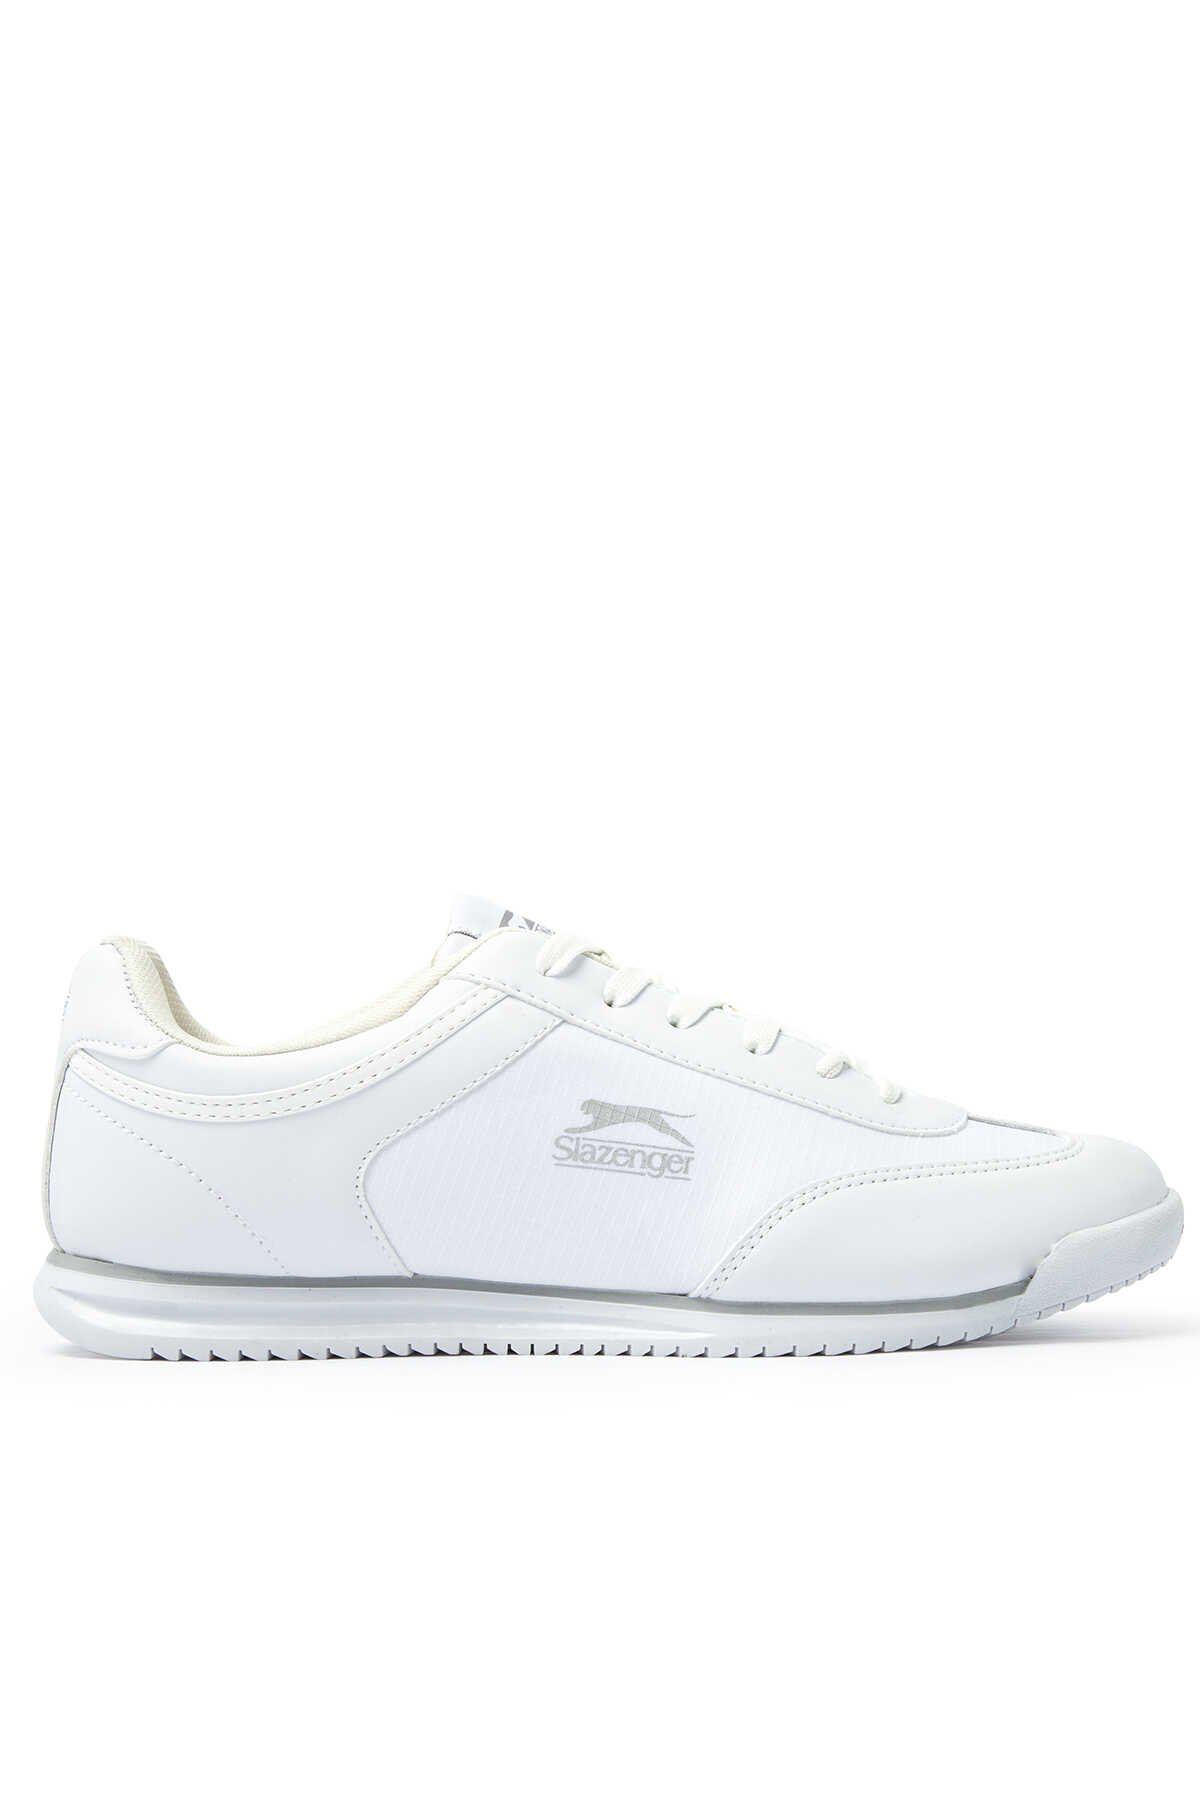 Slazenger - Slazenger MOJO I Sneaker Erkek Ayakkabı Beyaz / Gri